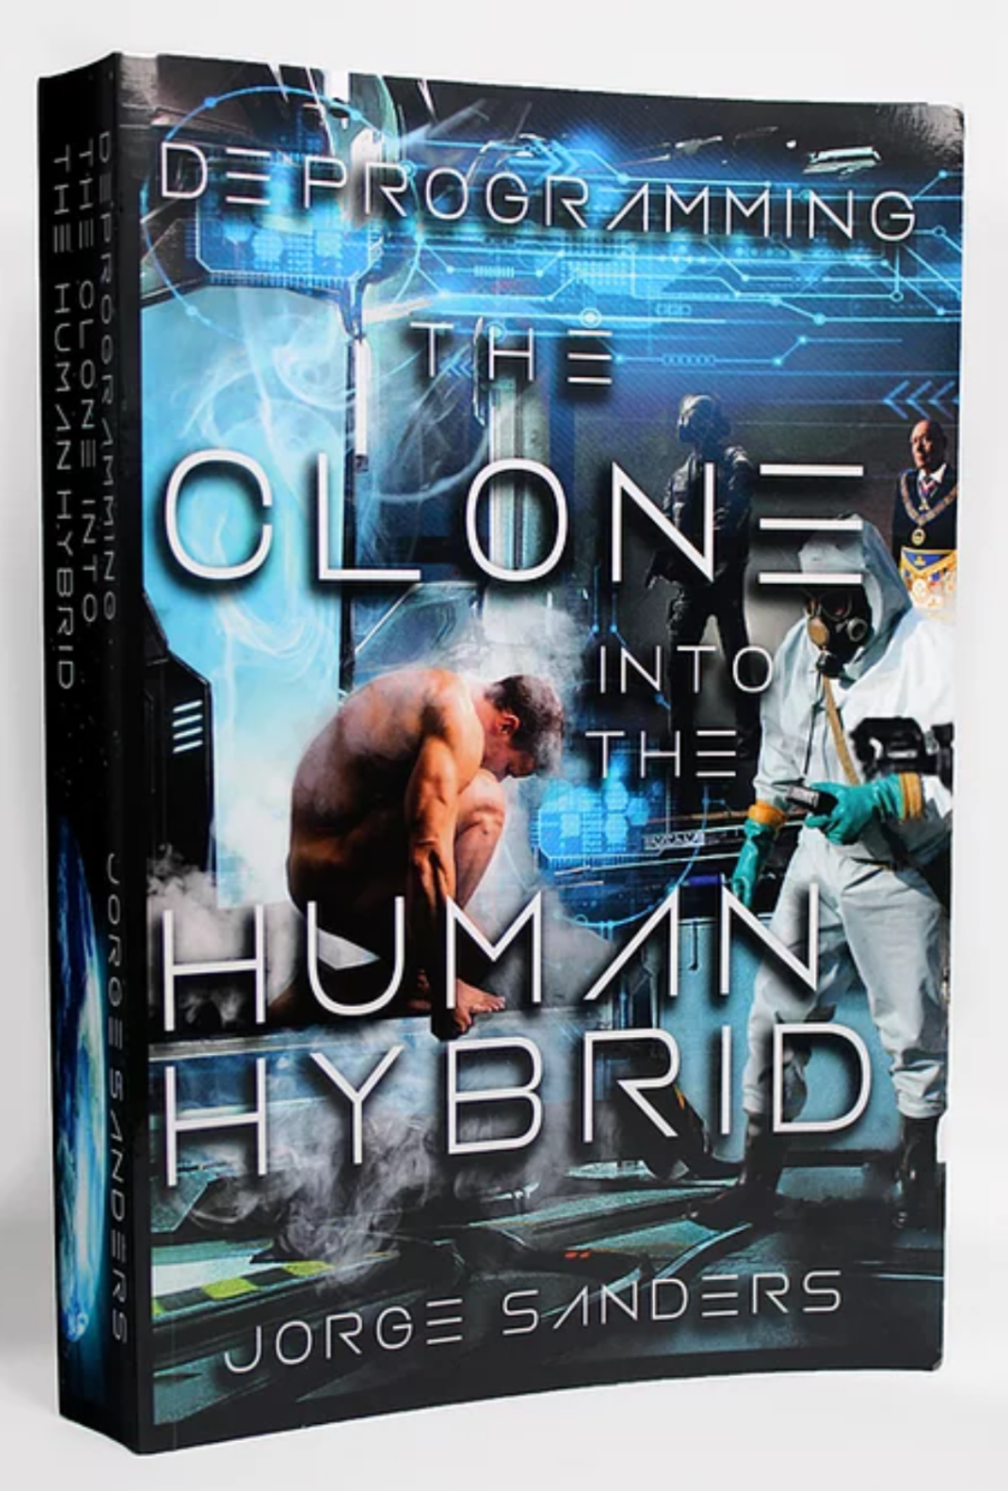  Deprogramming the Clone into the Human Hybrid